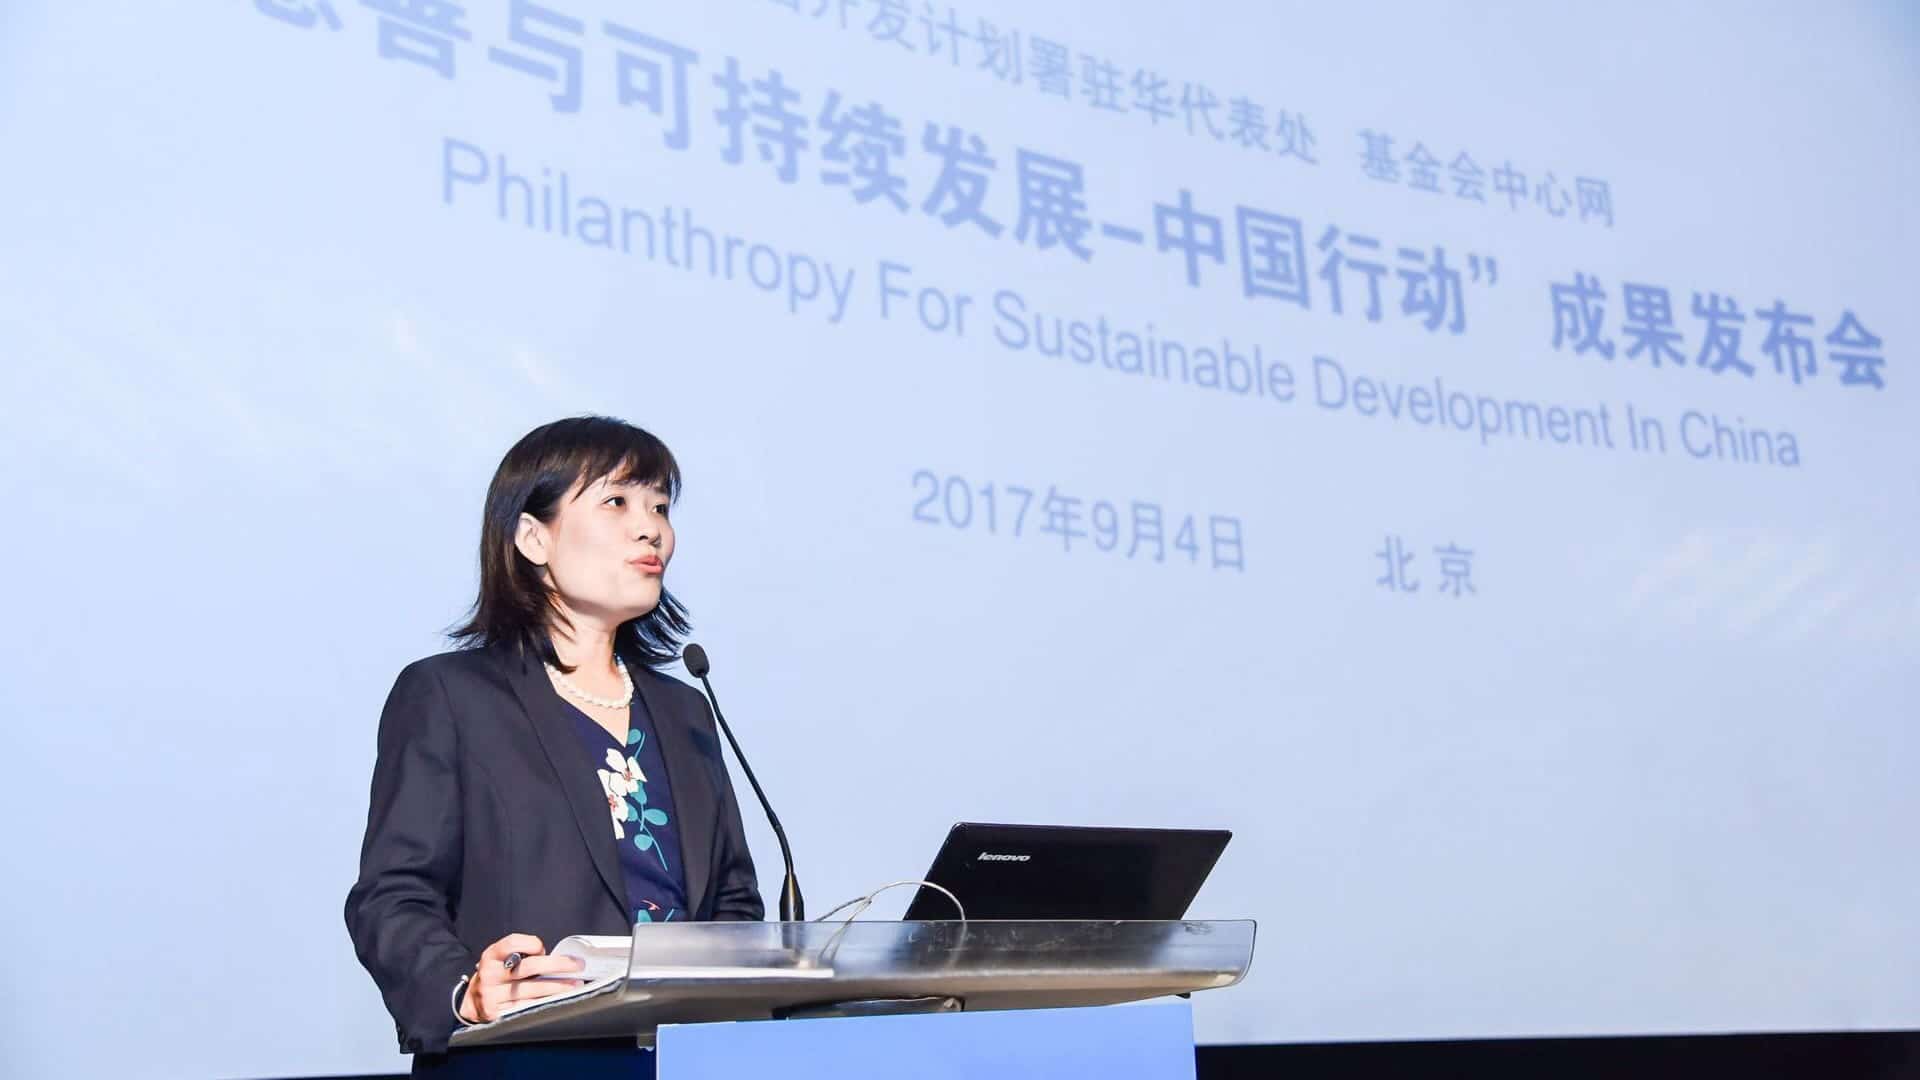 Gu Qing from UNDP